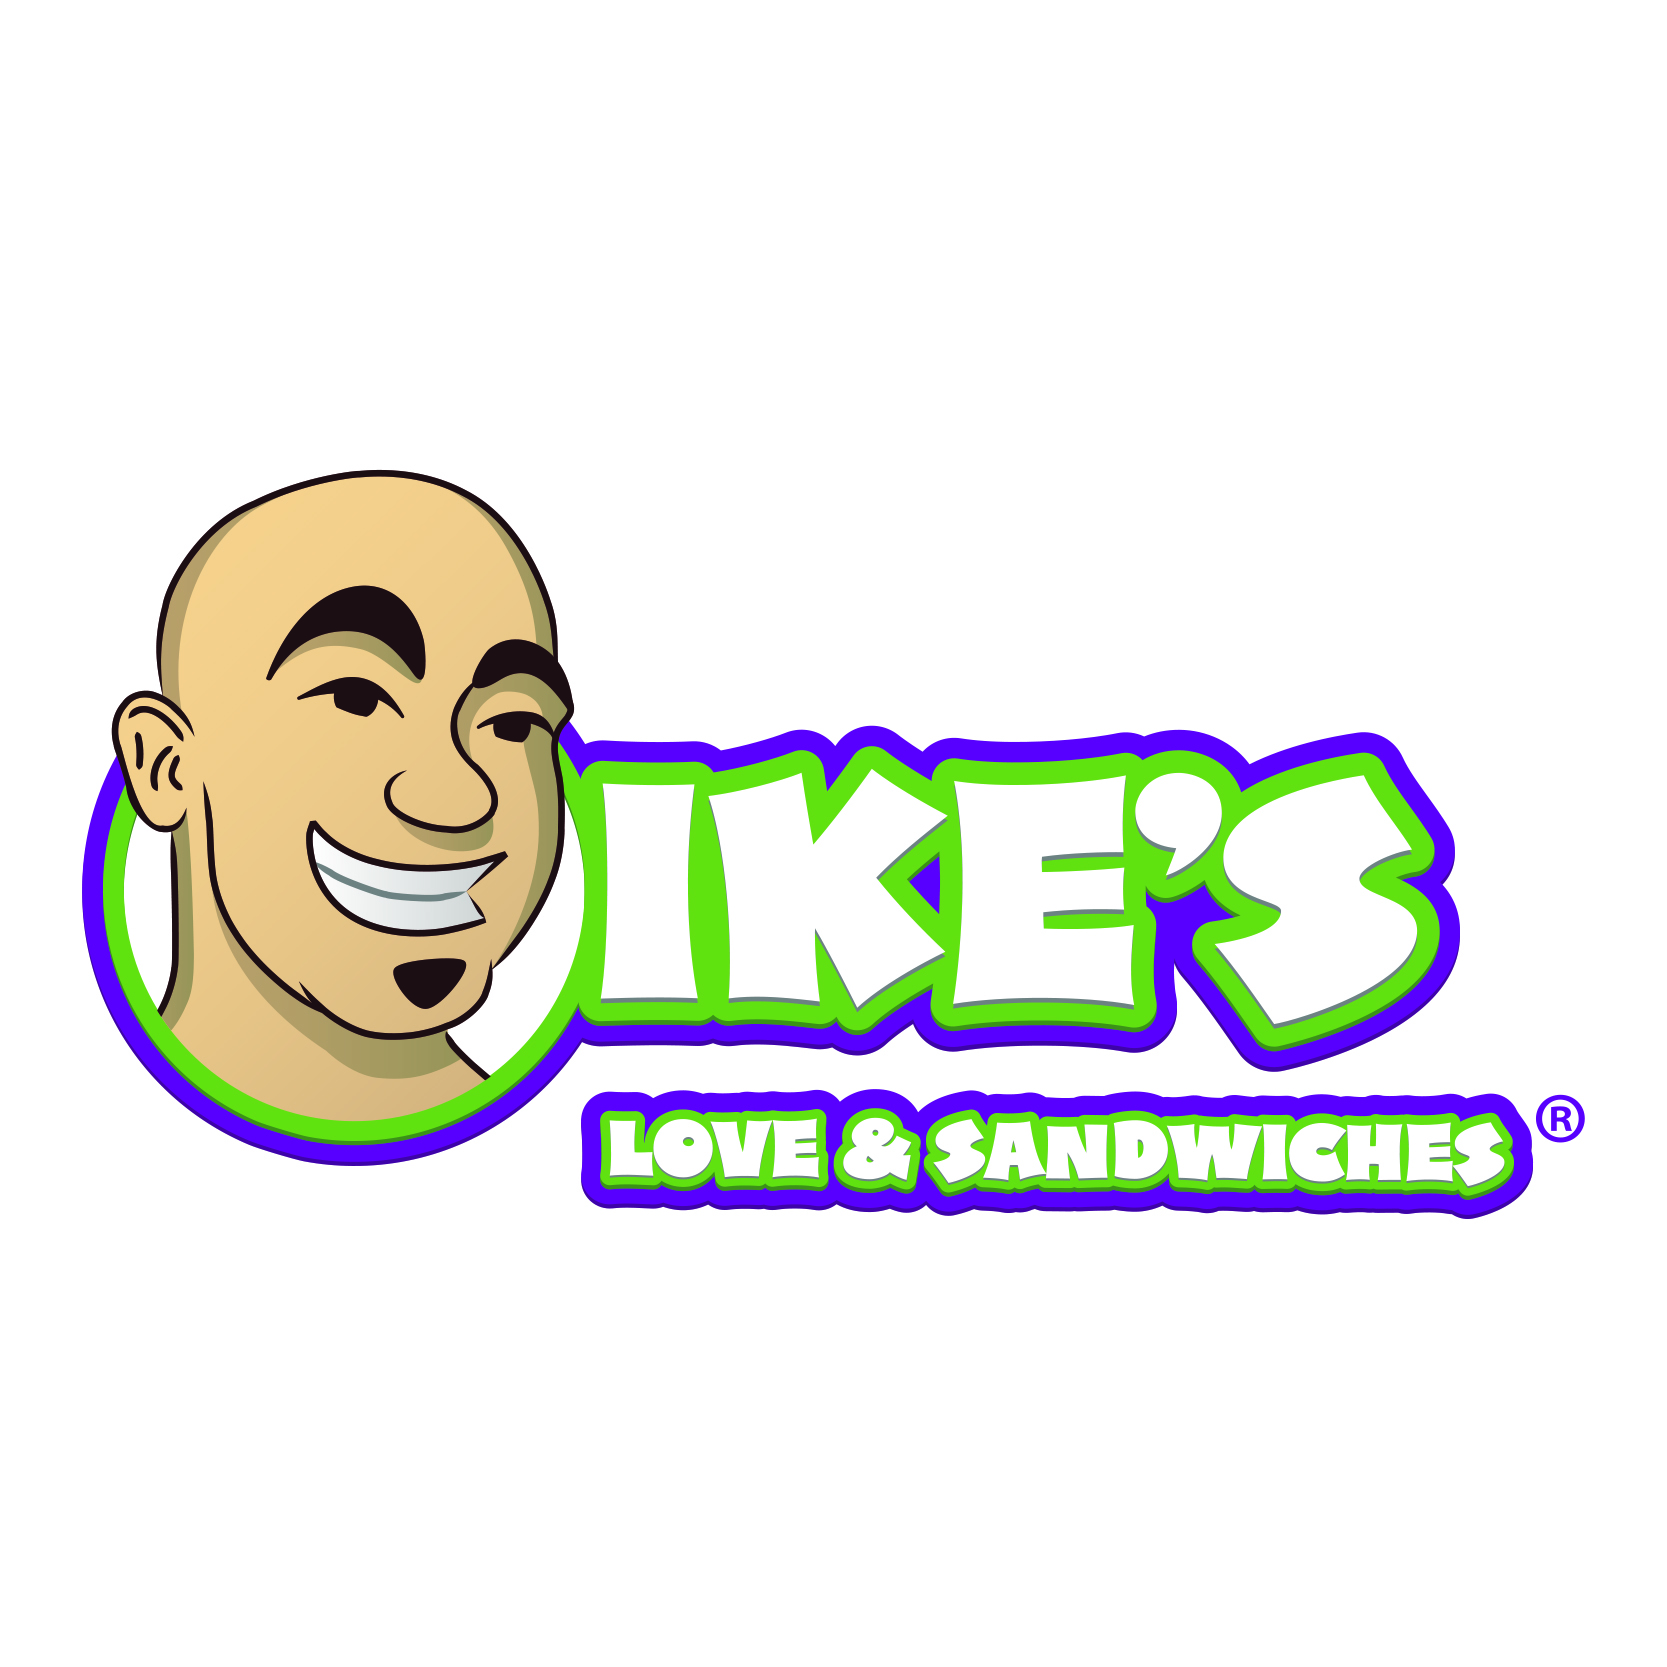 IKE’S LOVE & SANDWIC